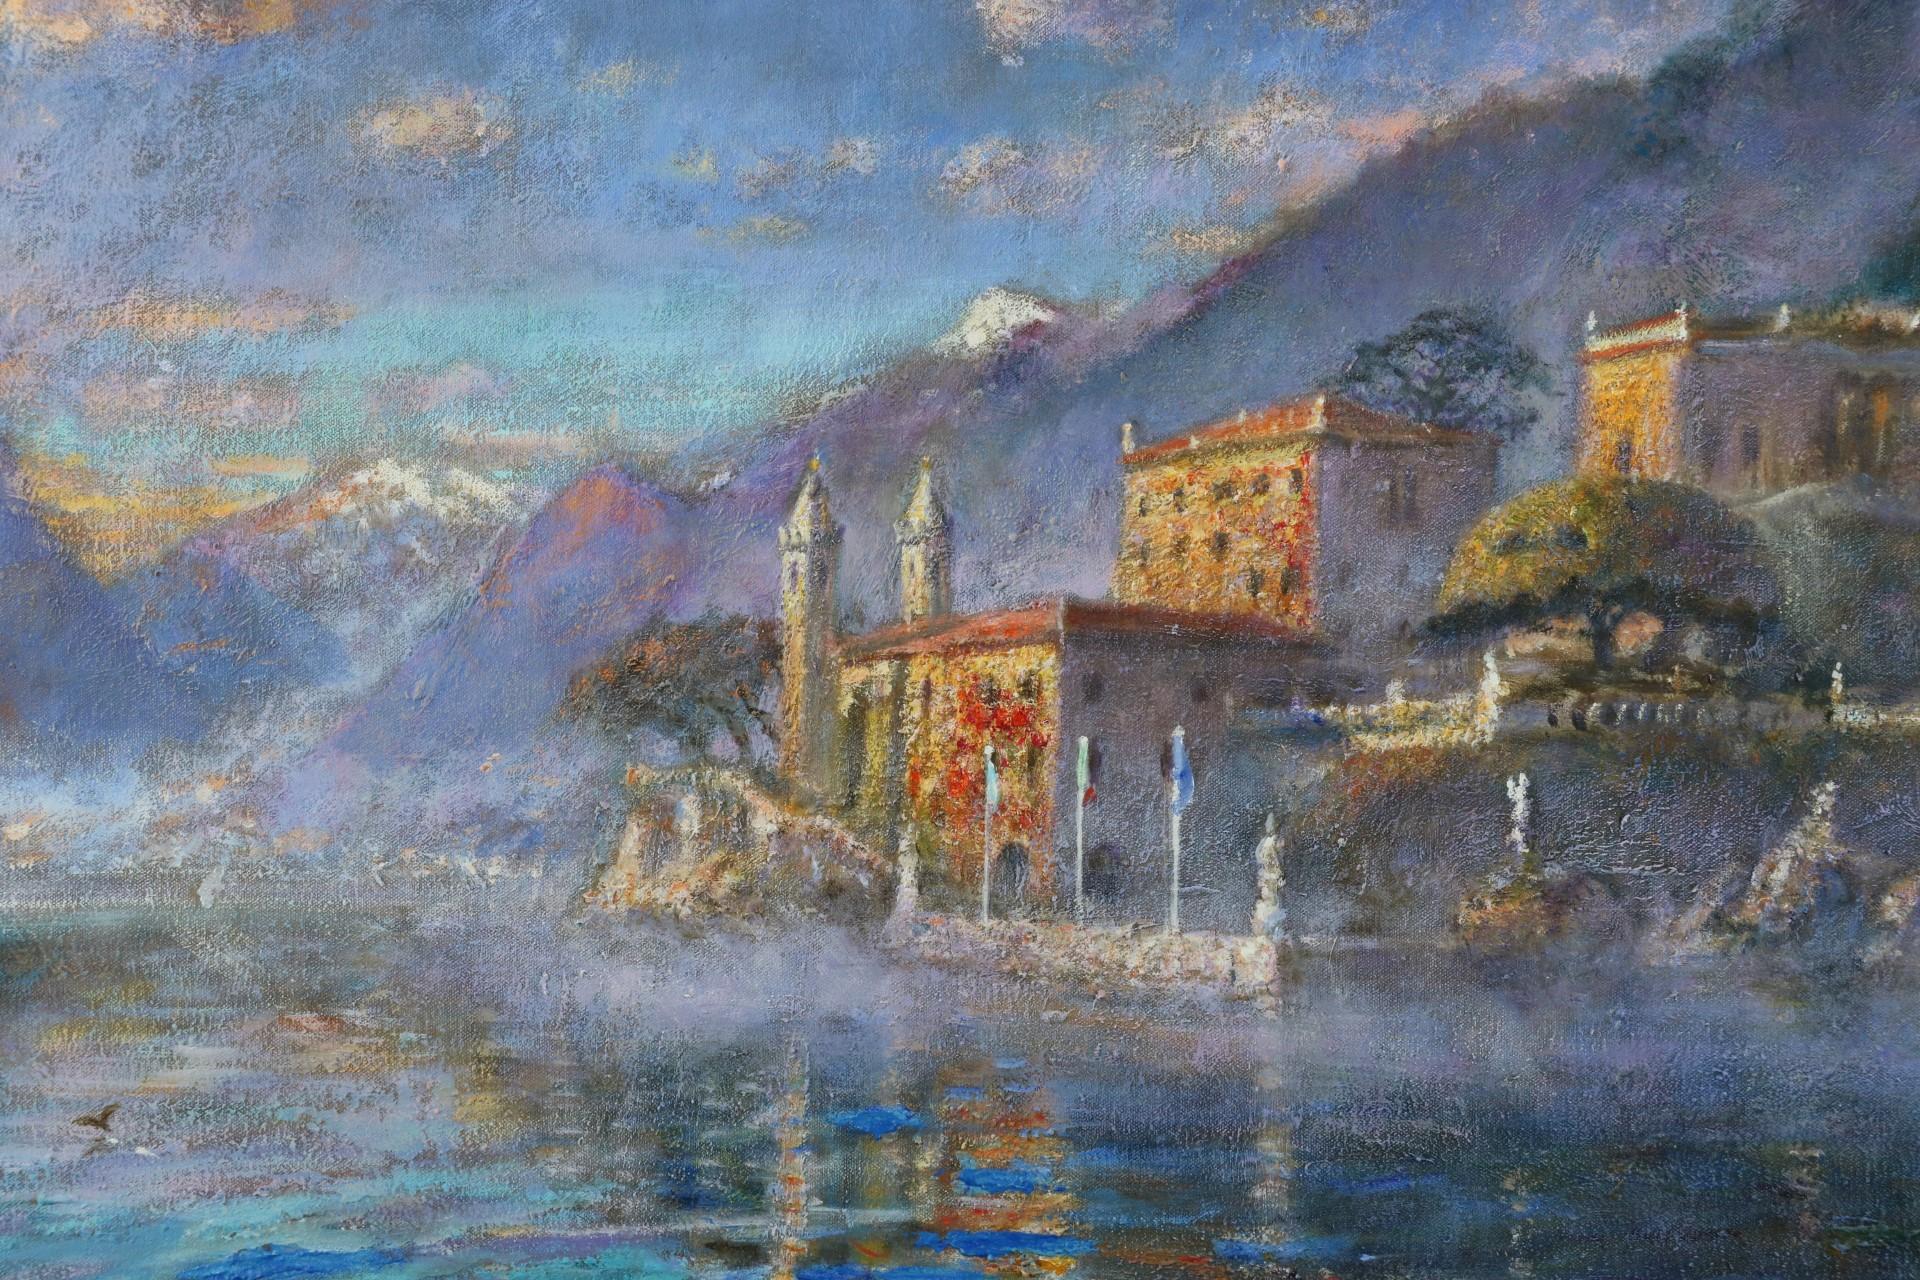 Rene Jerome Legrand  Landscape Painting - Autumn Mist, Villa Balbianello, Lake Como Large Oil Painting of Lakes and Villa 